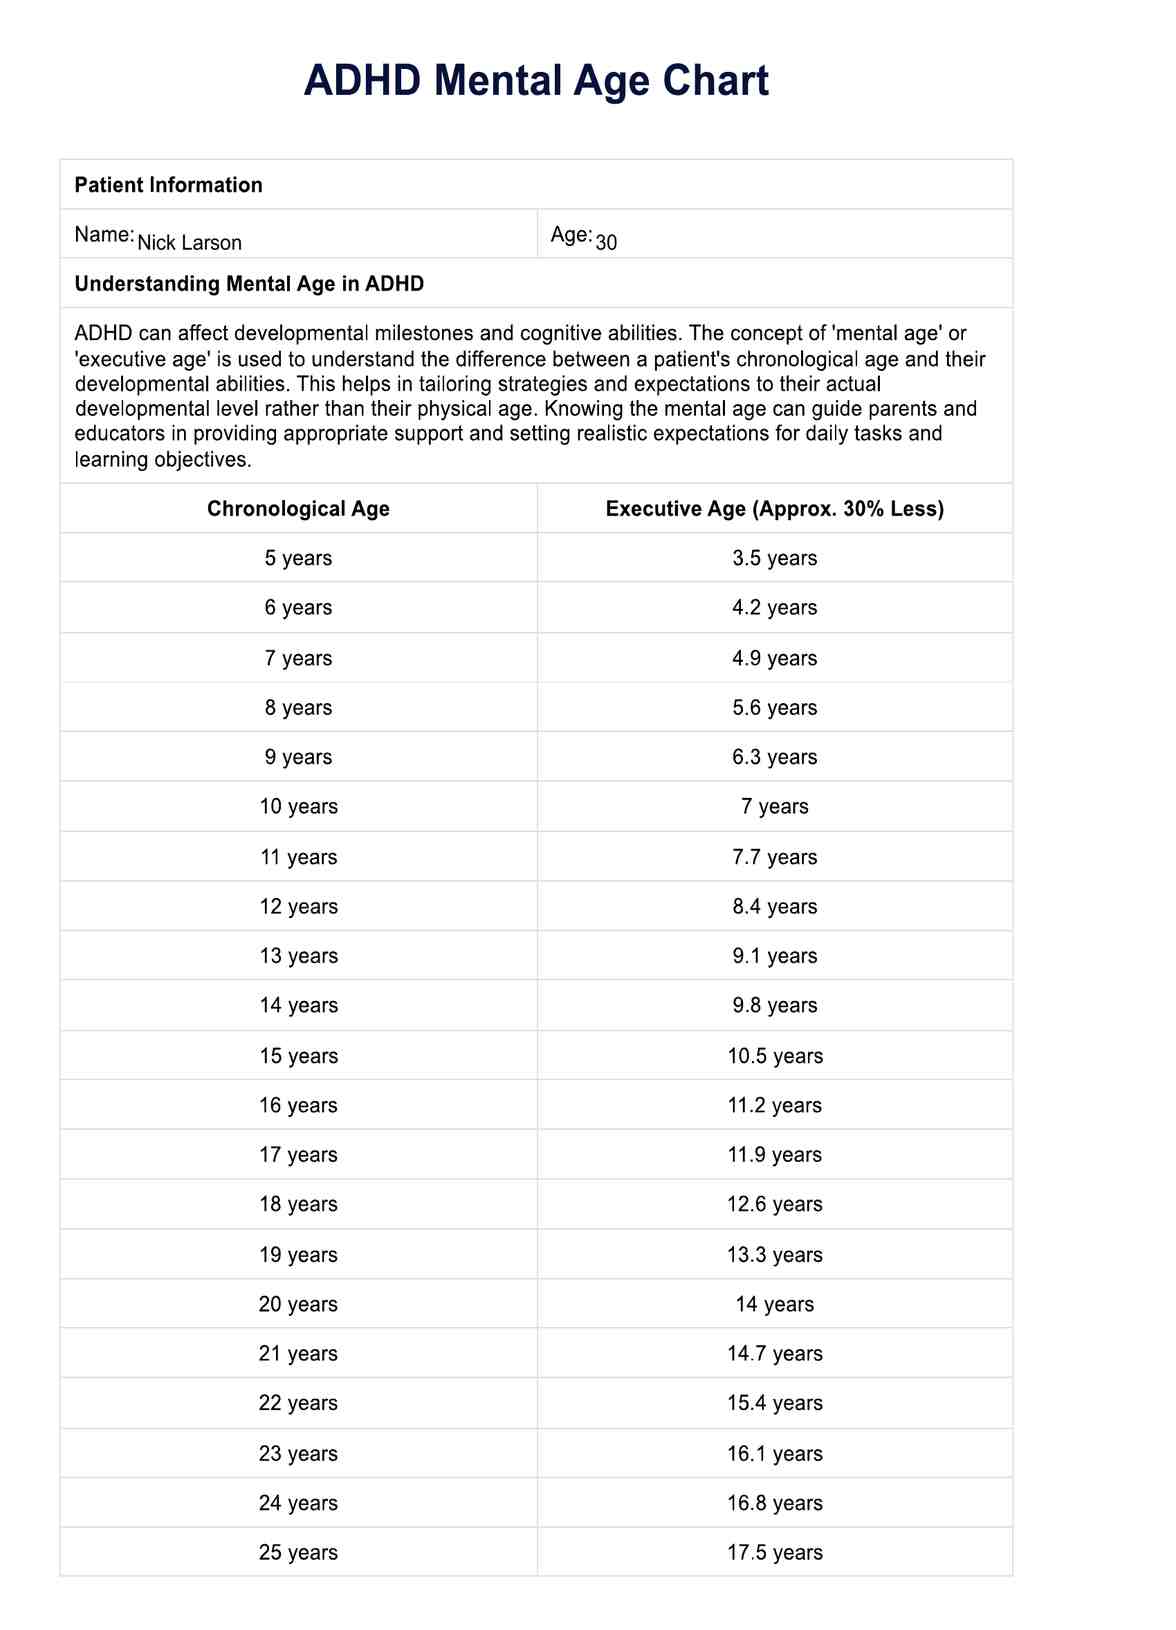 ADHD Mental Age Chart PDF Example